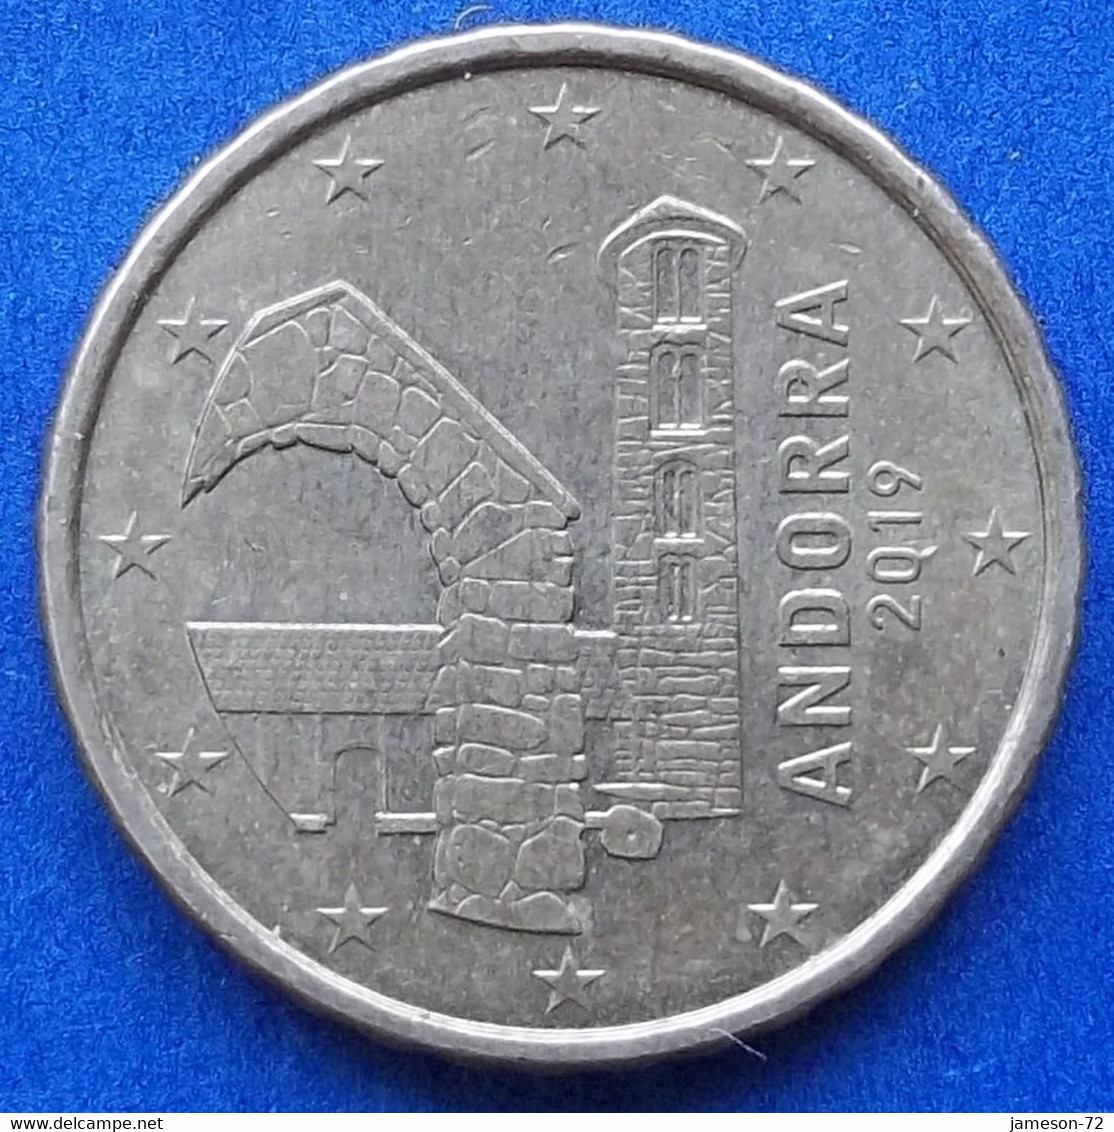 ANDORRA - 10 Euro Cents 2019 "Santa Coloma" KM# 523 - Edelweiss Coins - Andorre